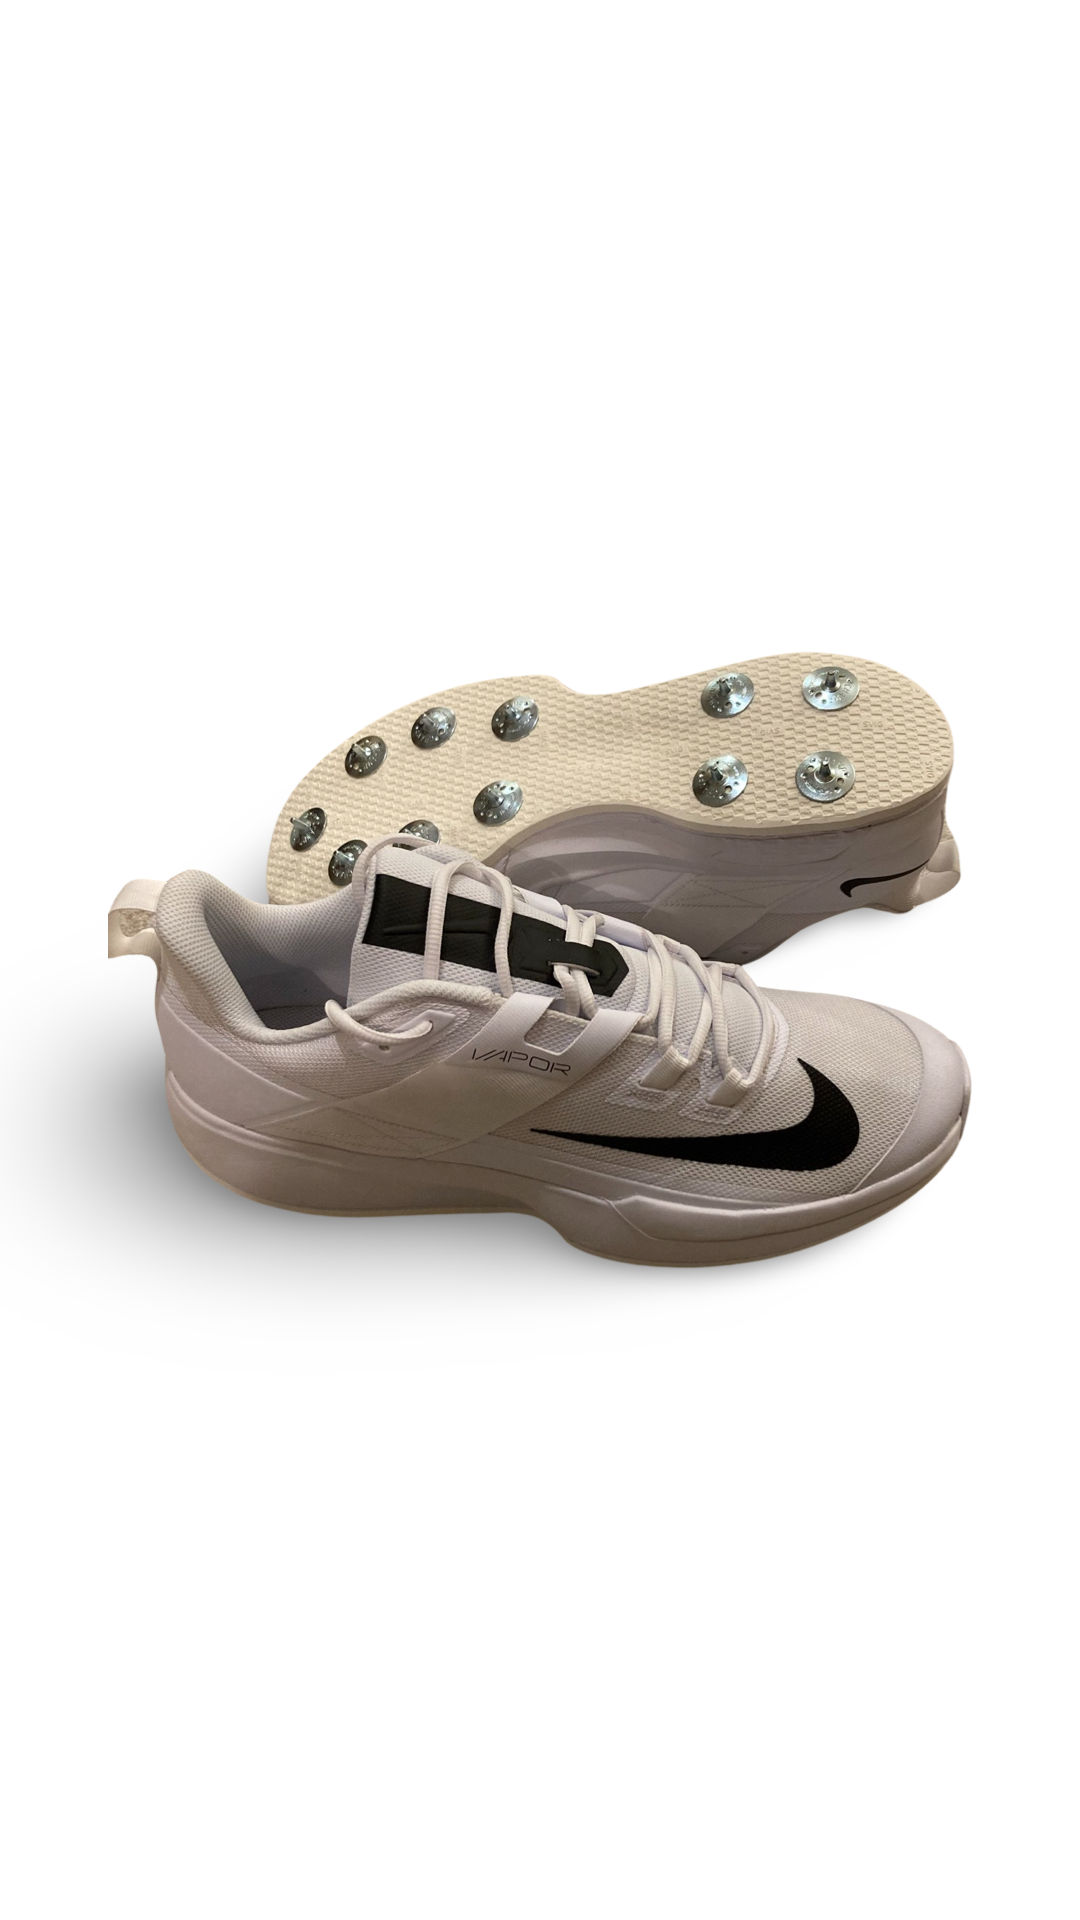 Nike Vapor Lite HC Trainers - Custom Cricket Spikes